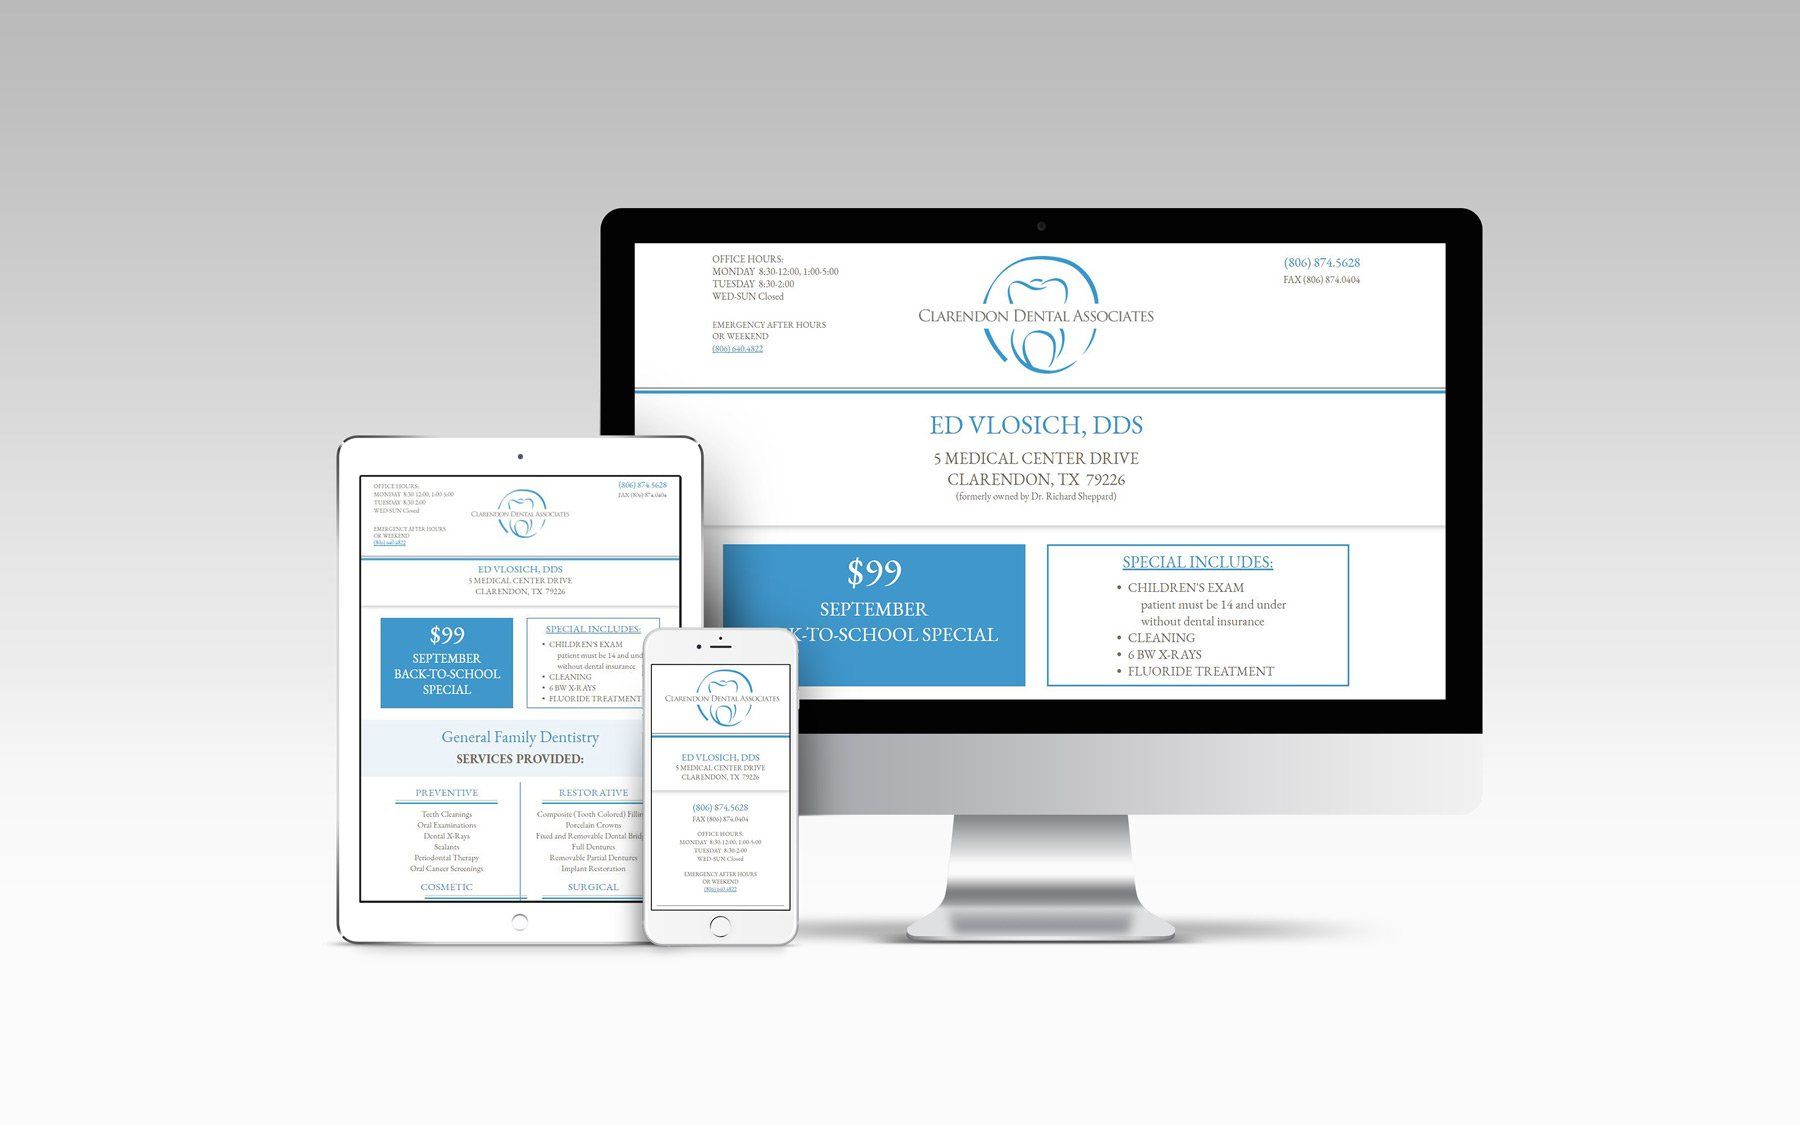 Clarendon Dental Associates website design by C&B Marketing